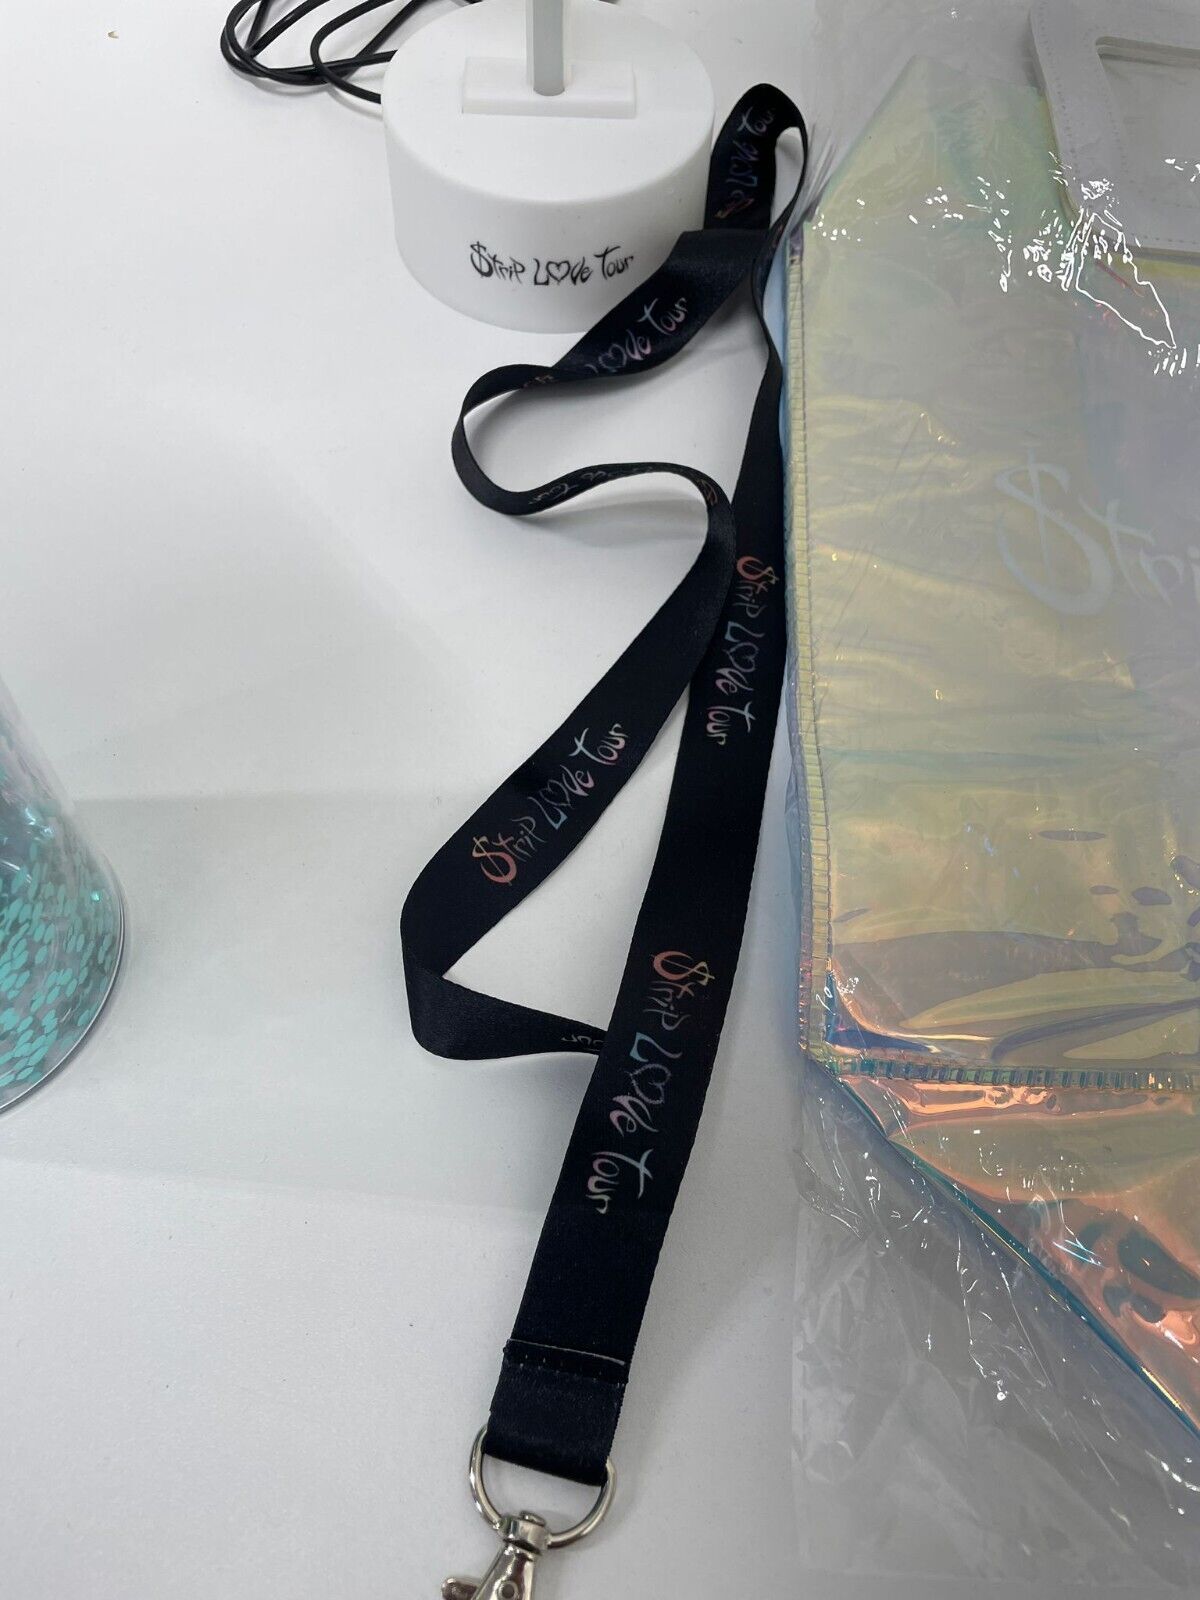 Karol G Strip Love World Tour Official Merch Tube Lamp Light Tote Bag Tumbler